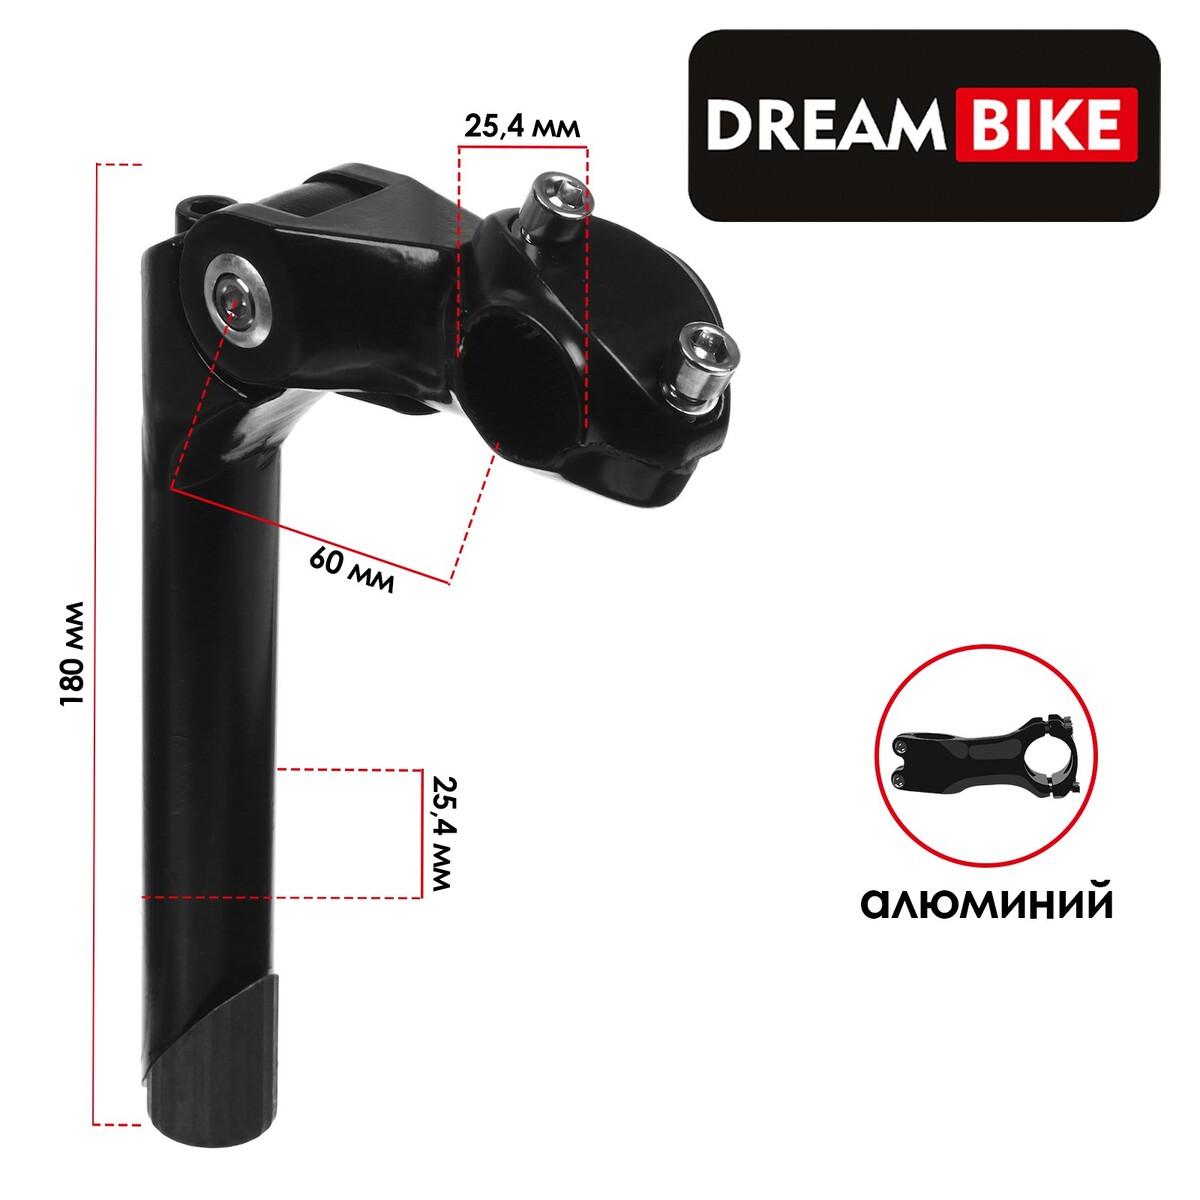 Вынос руля dream bike 1 Dream Bike